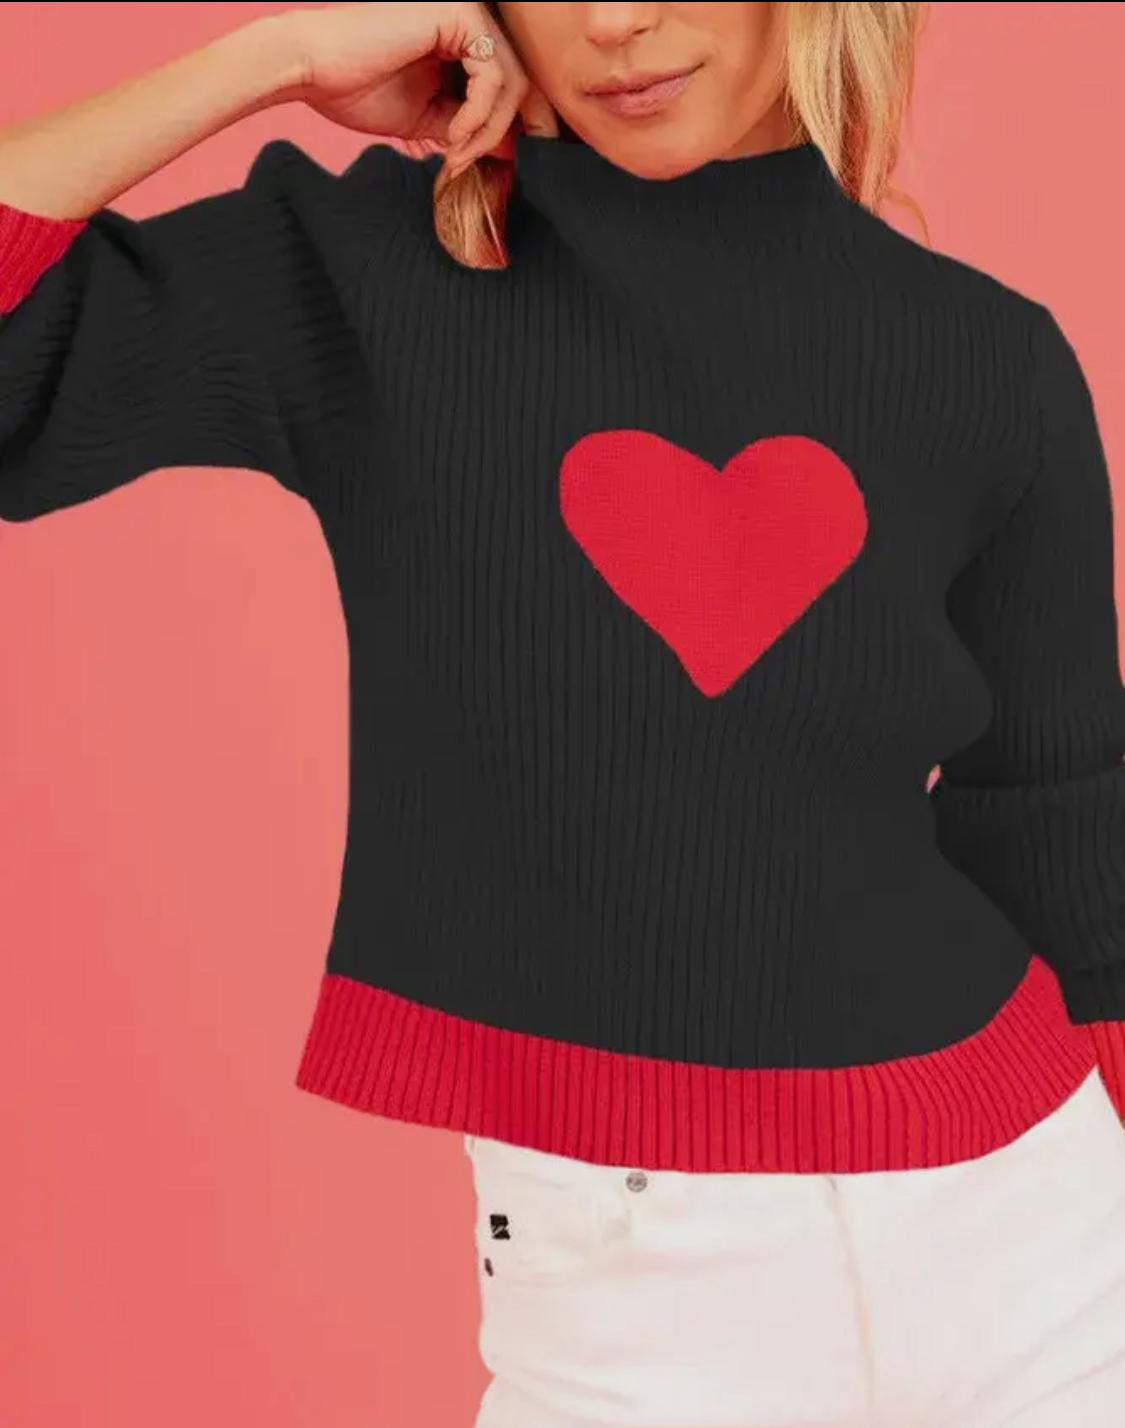 Knitting Heart Valentine Sweater